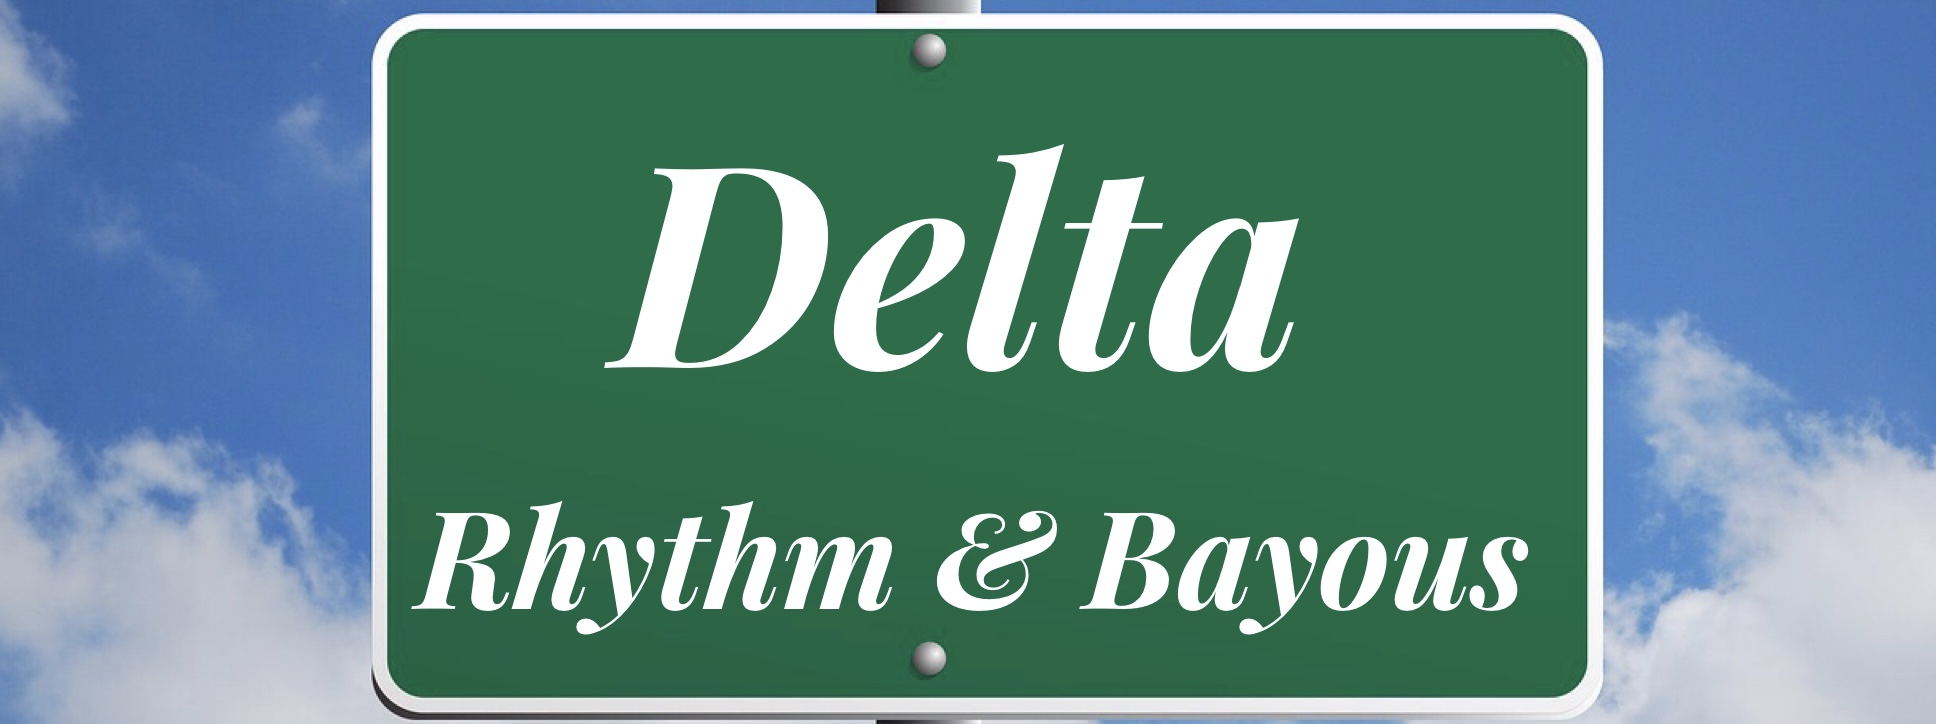 Delta Rhythm & Bayous banner styled like a highway sign. Credit (original blank highway sign image): Merio/Pixabay for original blank sign. Otherwise credit/copyright pbjunction.com / PB Junction, LLC